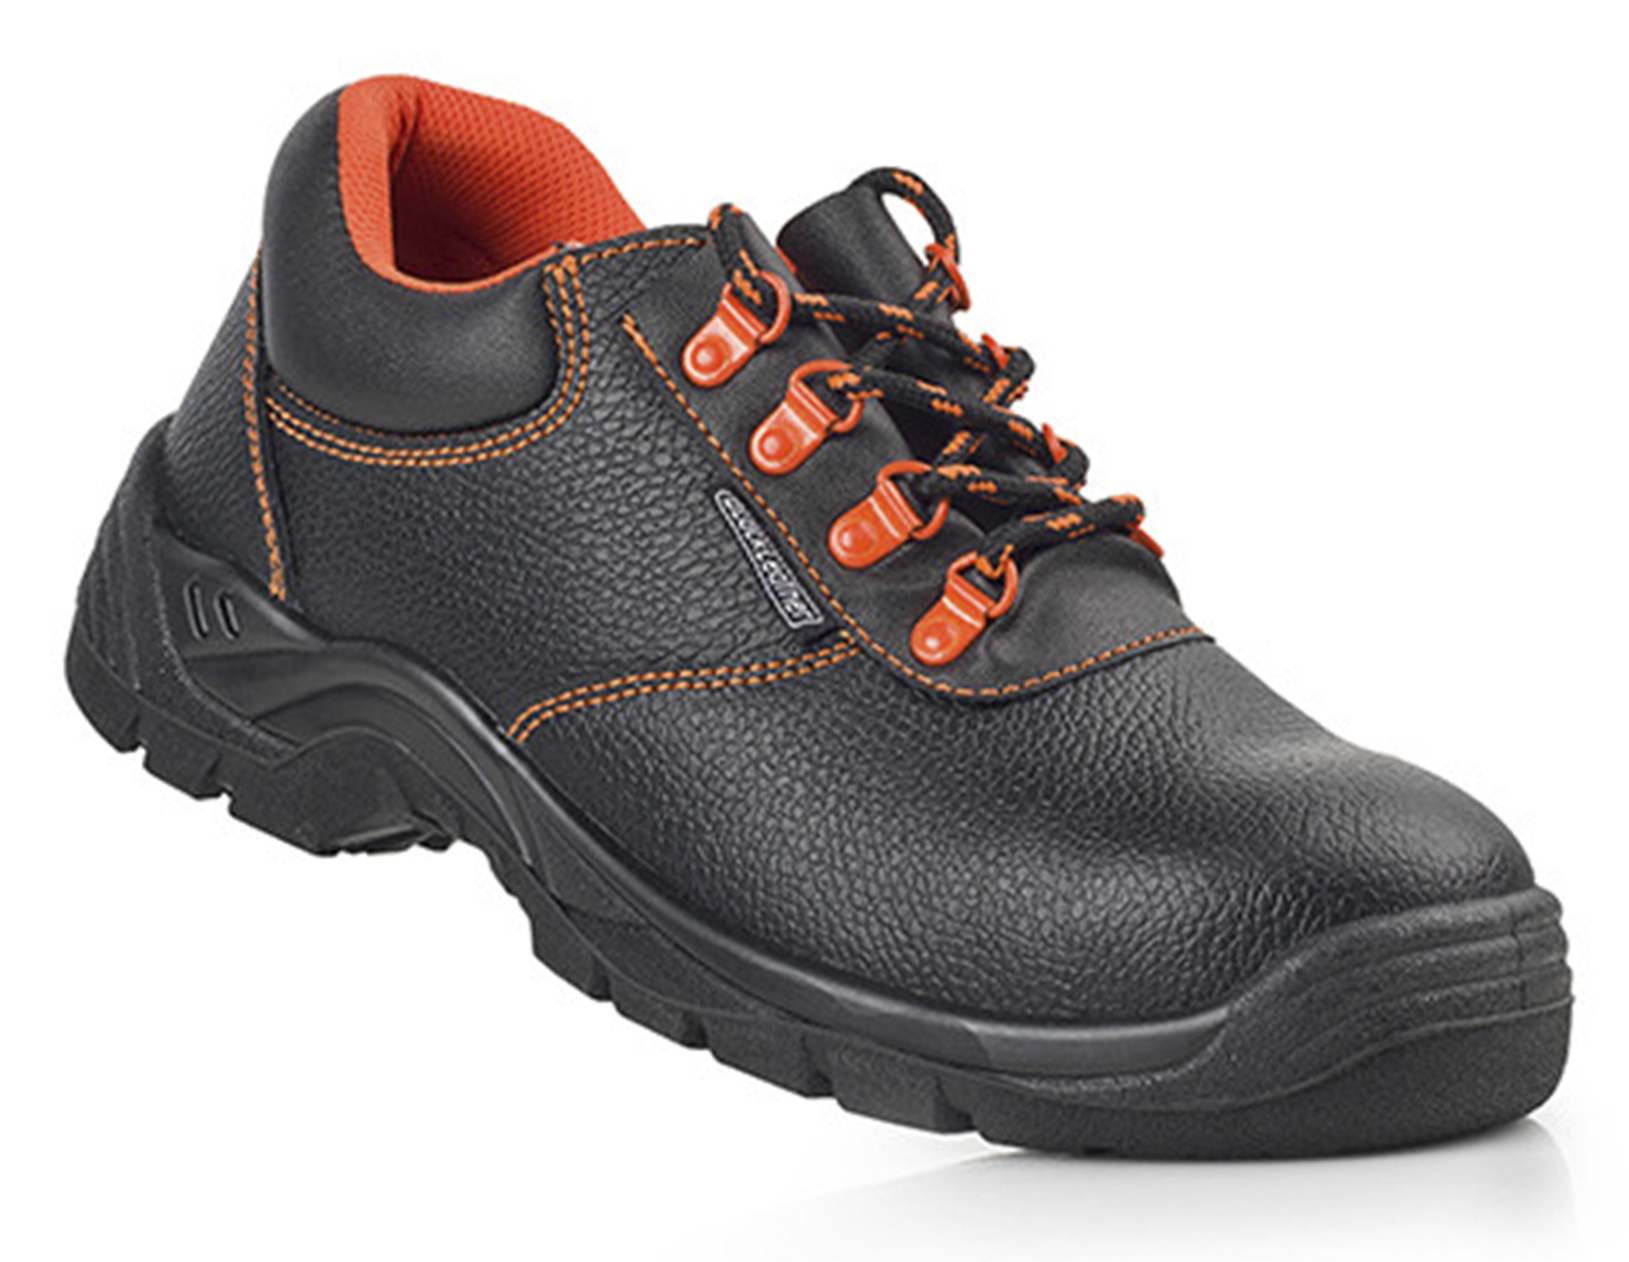 ZECO1 Calzado de Seguridad BlackLeather Zapato mod. ZECO1 (S3 SRC E A).